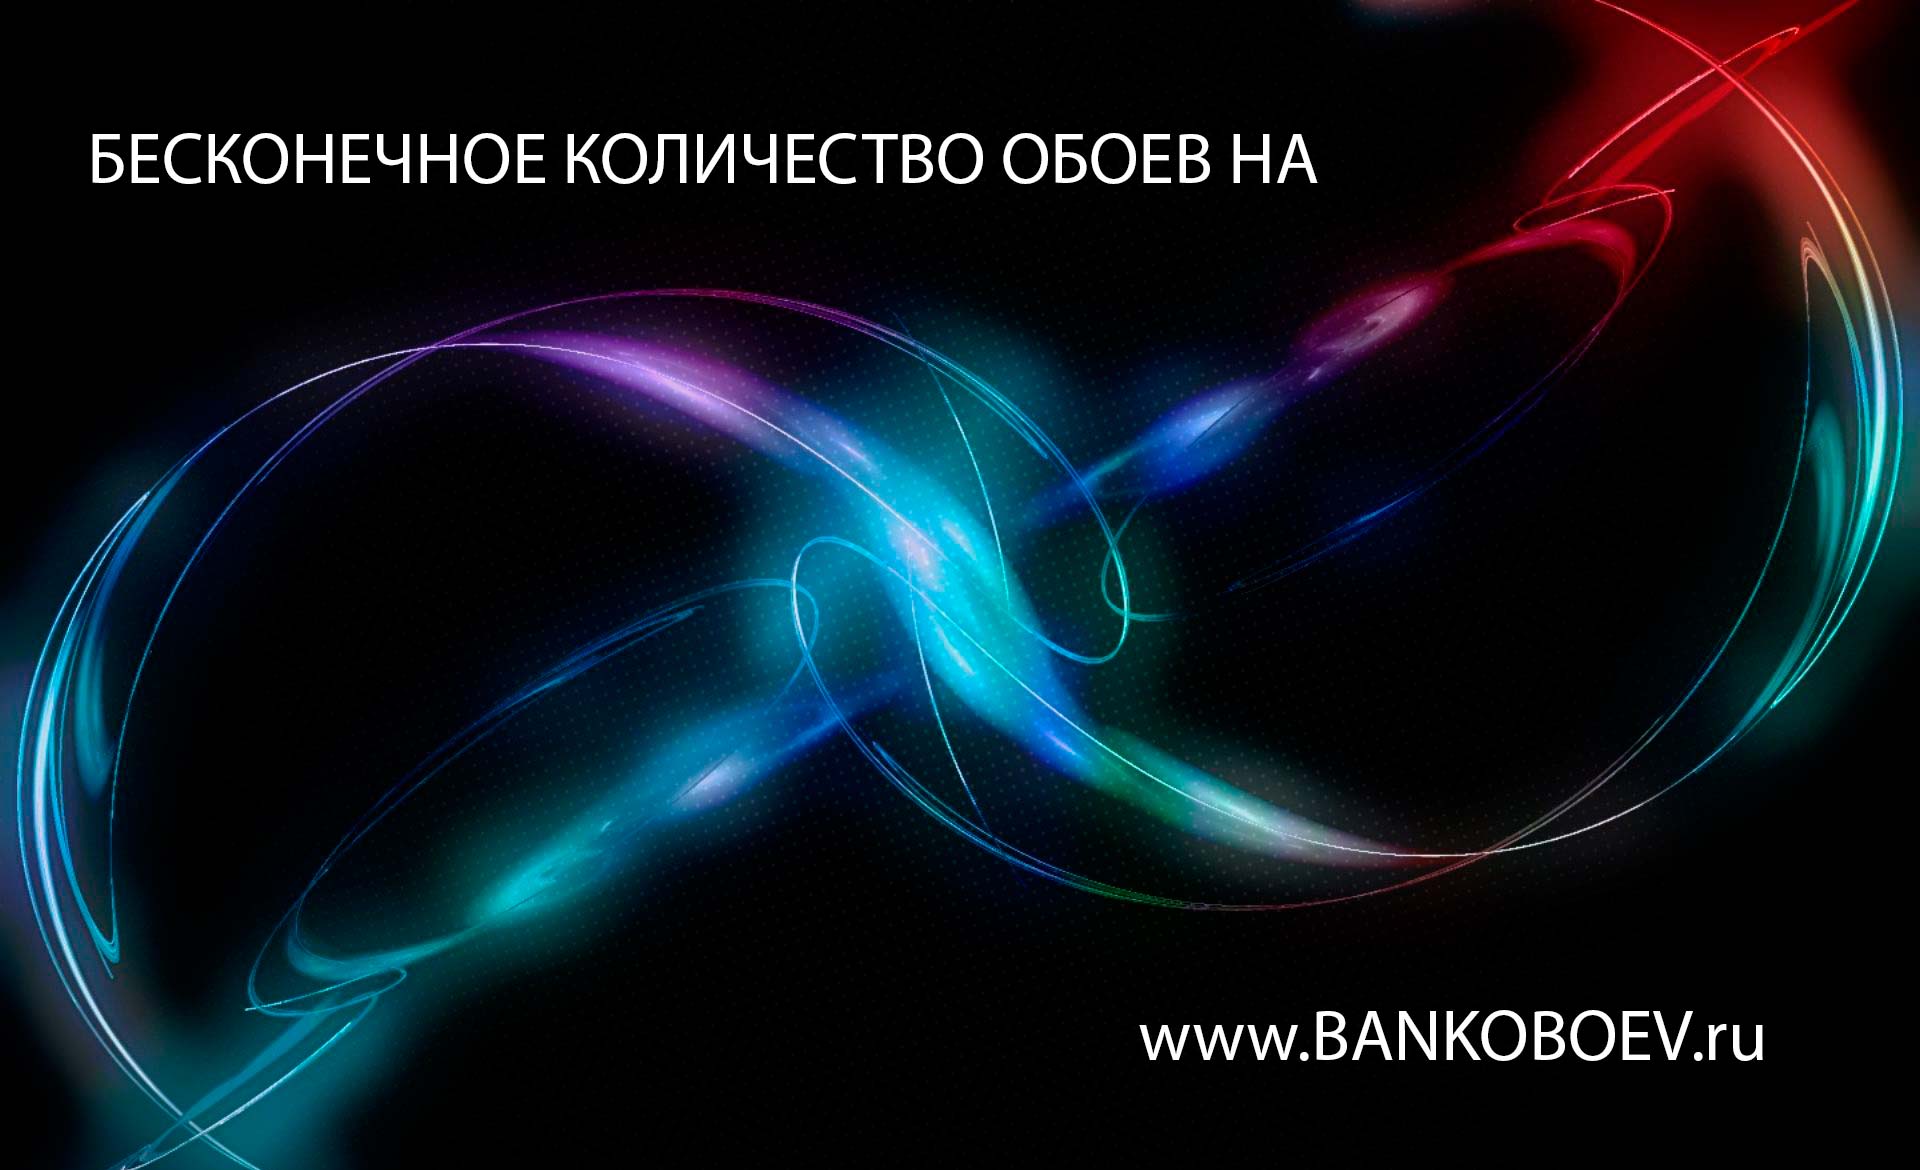 Bankoboev Ru Image Odcwndu Jpg